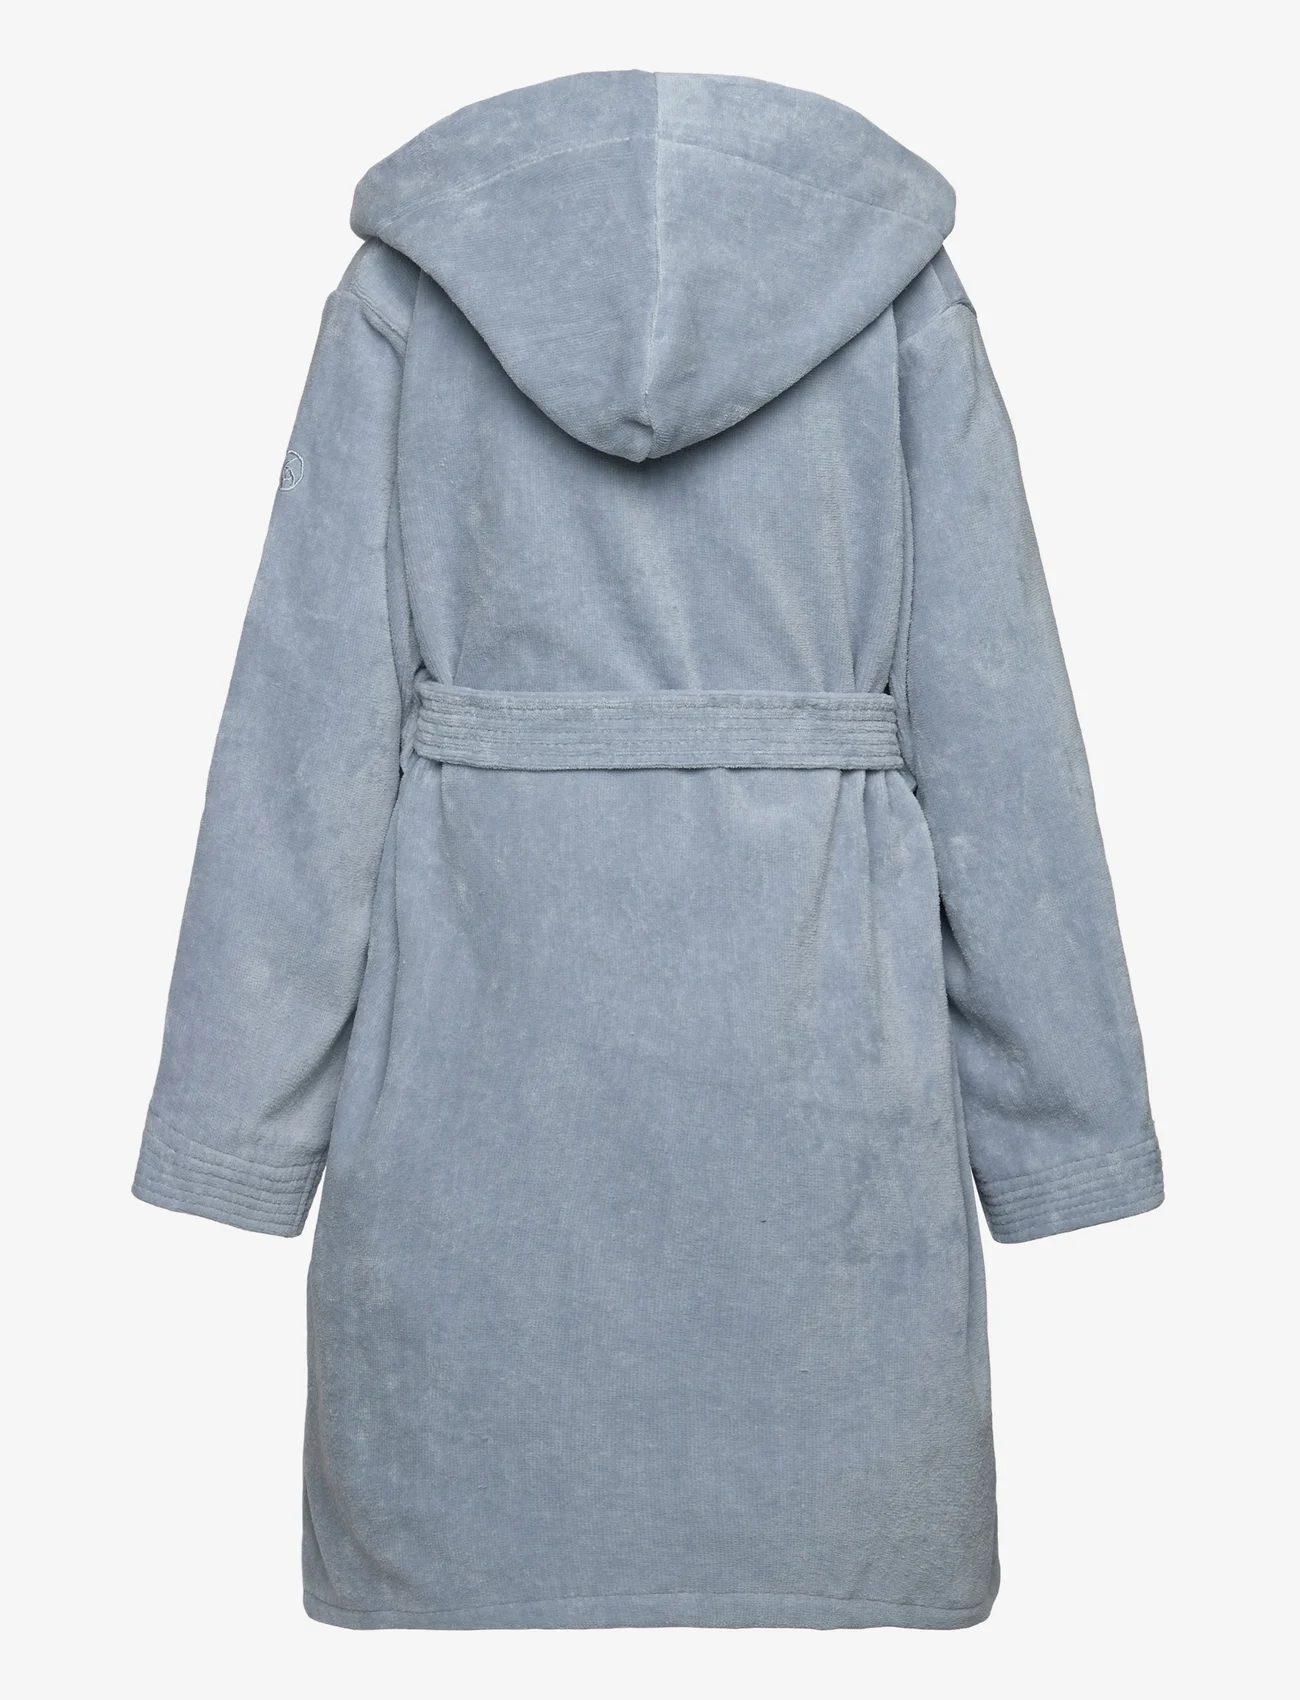 Rosemunde Kids - Organic robe - alusvaatteet & yöasut - dusty blue - 1